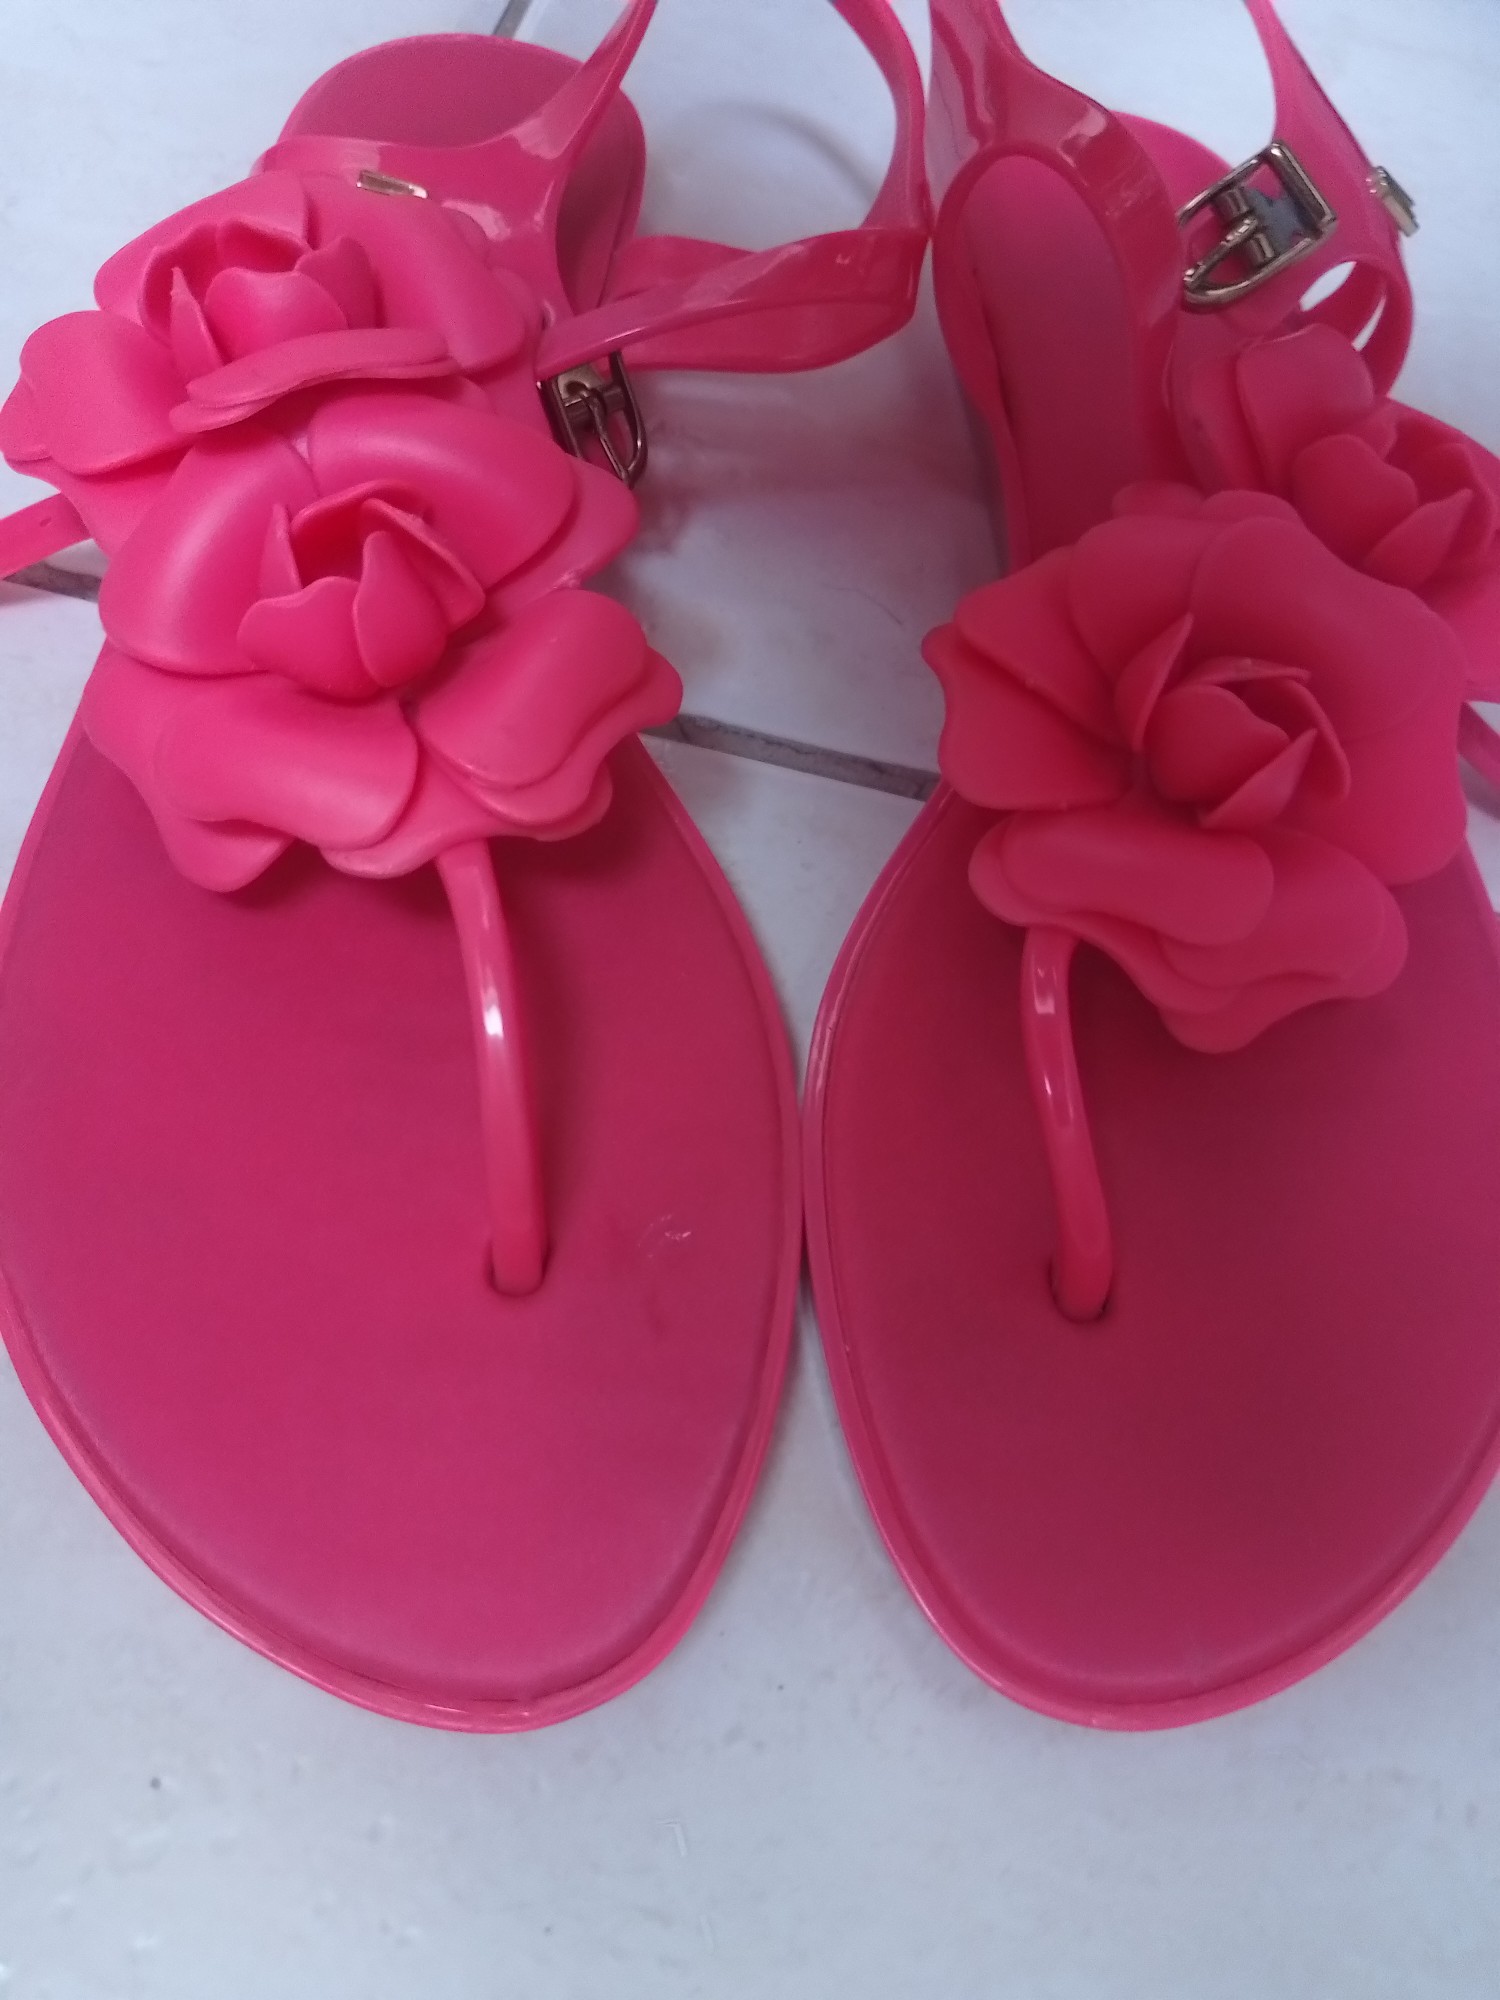 zapatos para mujer - Zapatillas con flores MELISSA size 8 sapatillas color rosa no son marca falsa 1